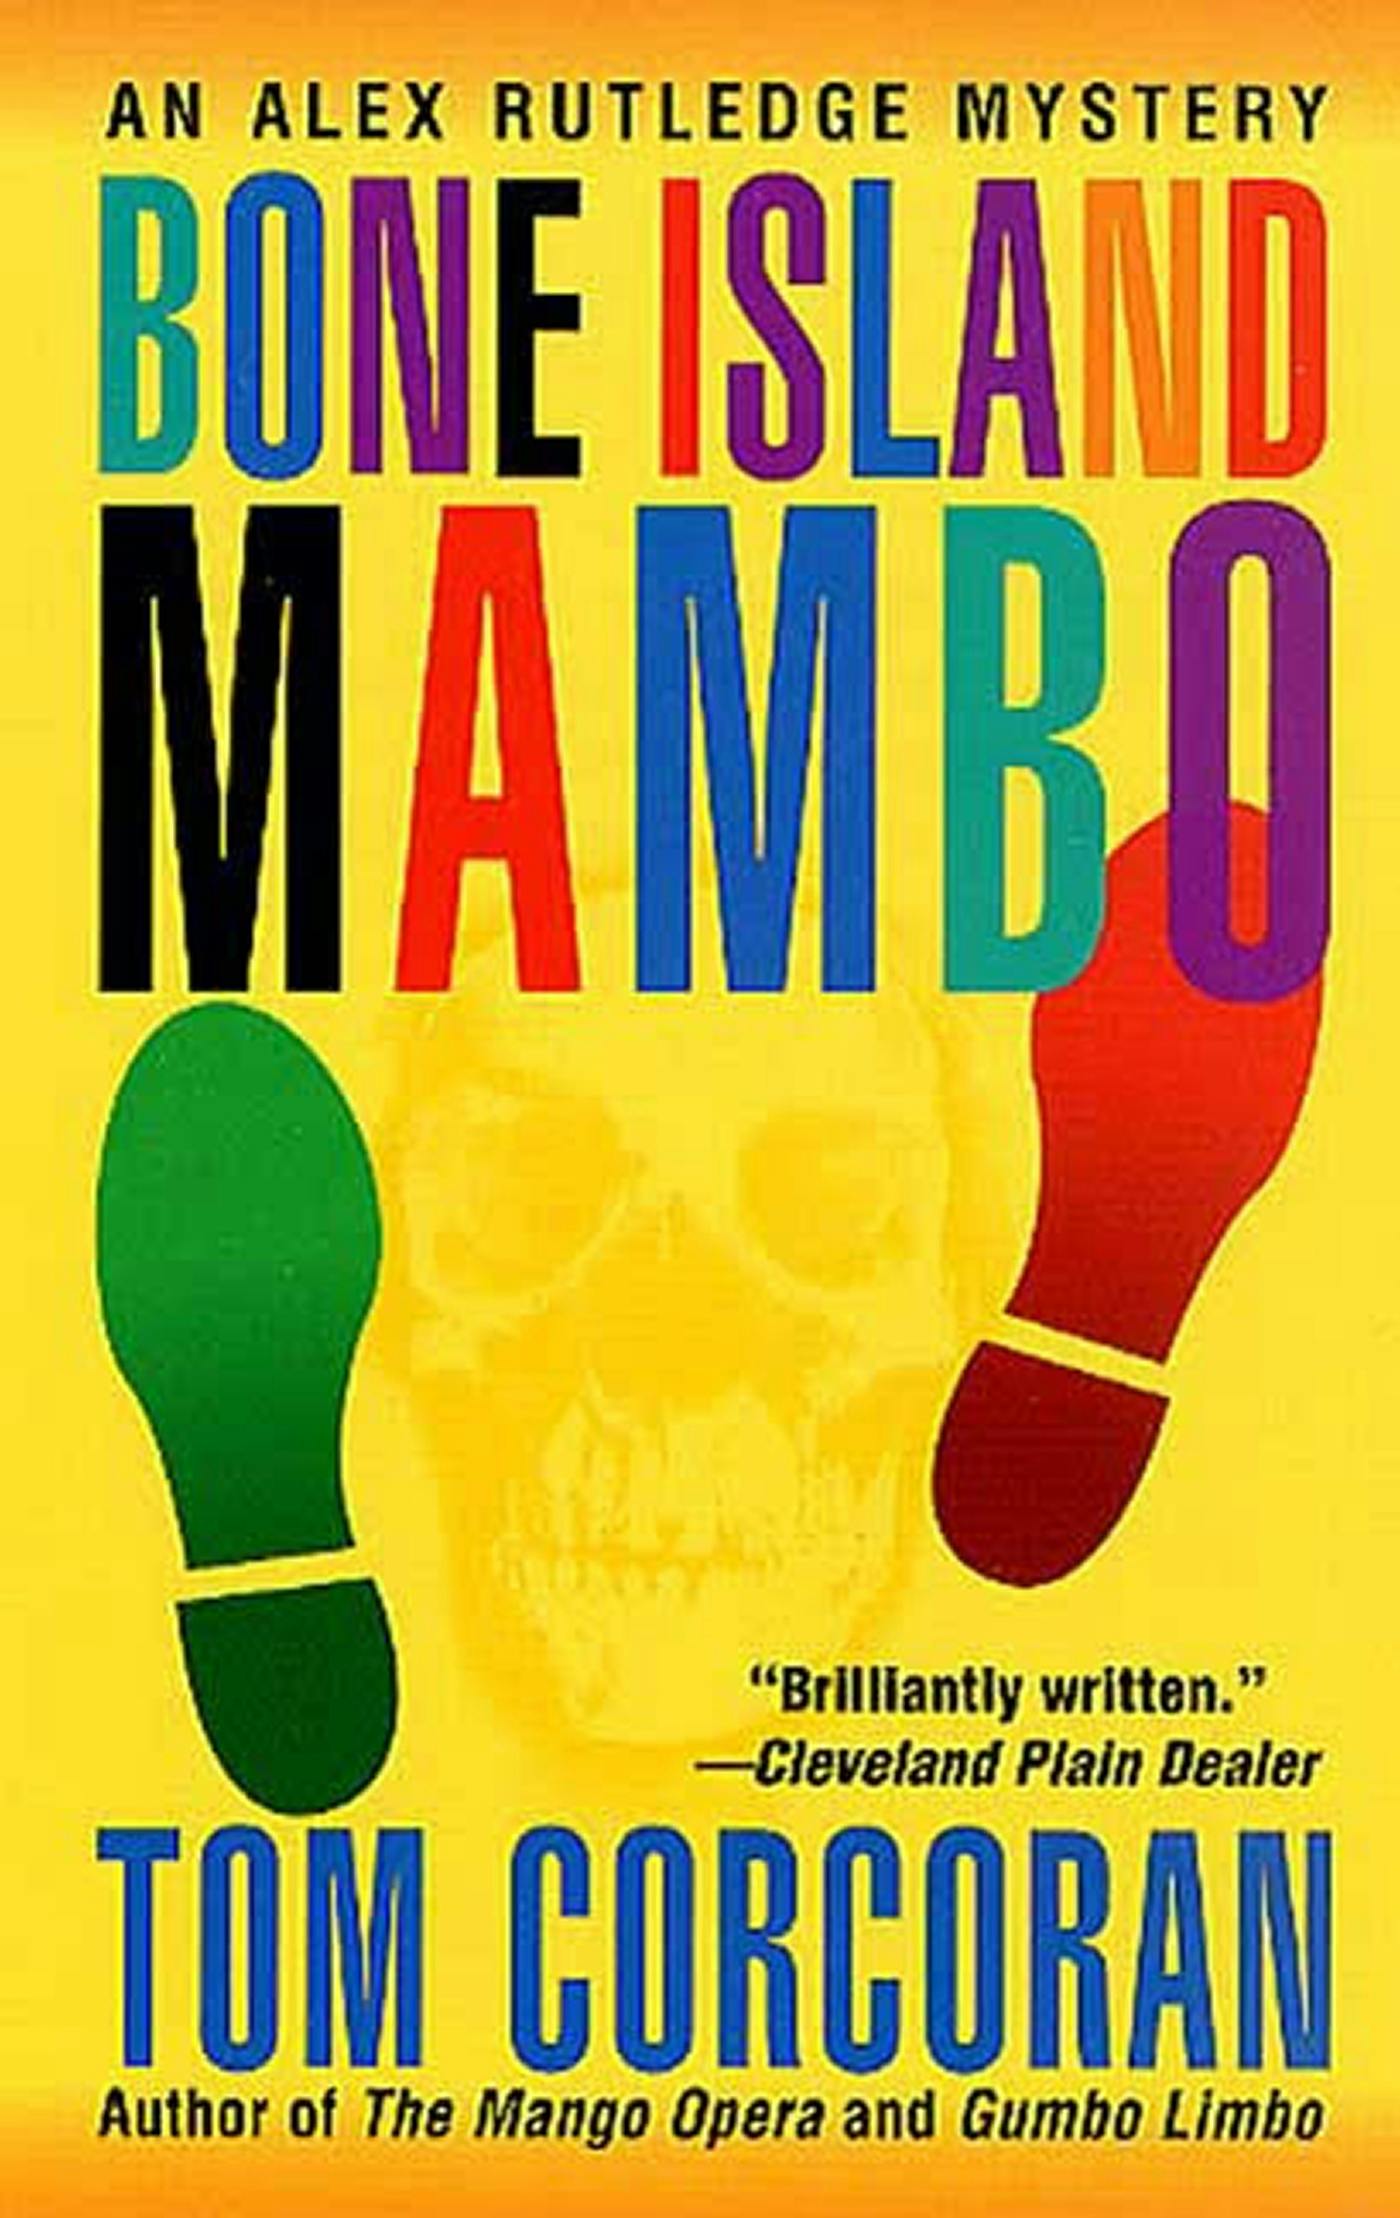 Bone Island Mambo